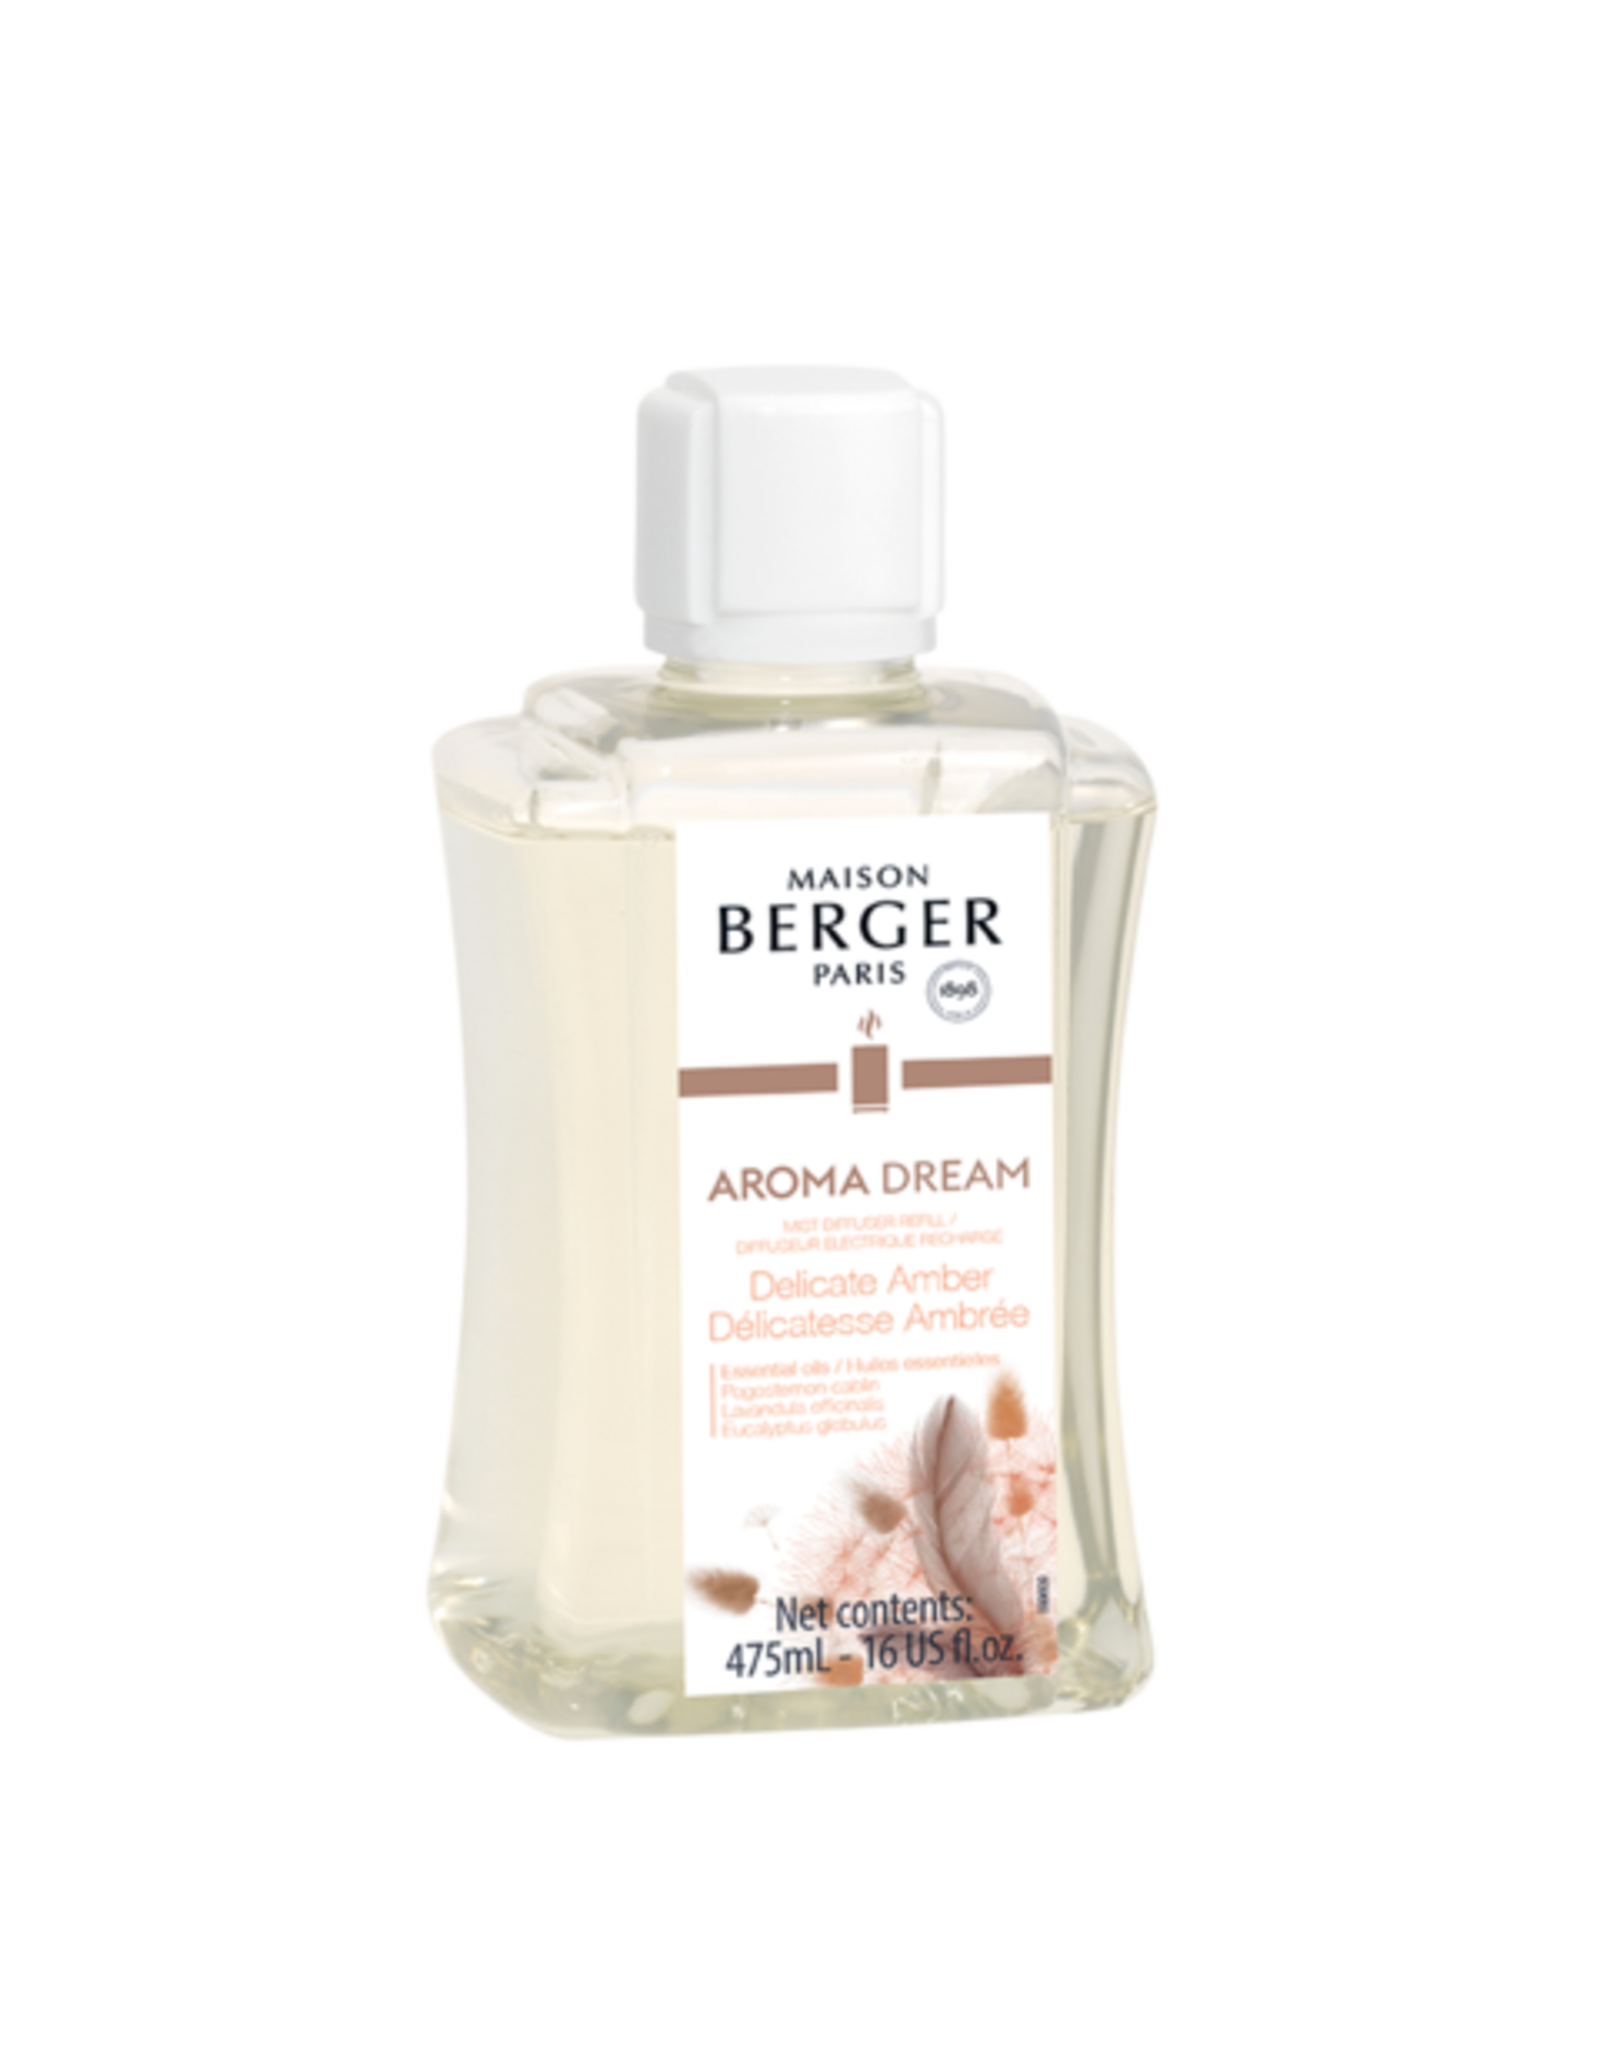 Maison Berger Mist Diffuser Fragrance 475ml Refill Aroma Dream Delicate Amber